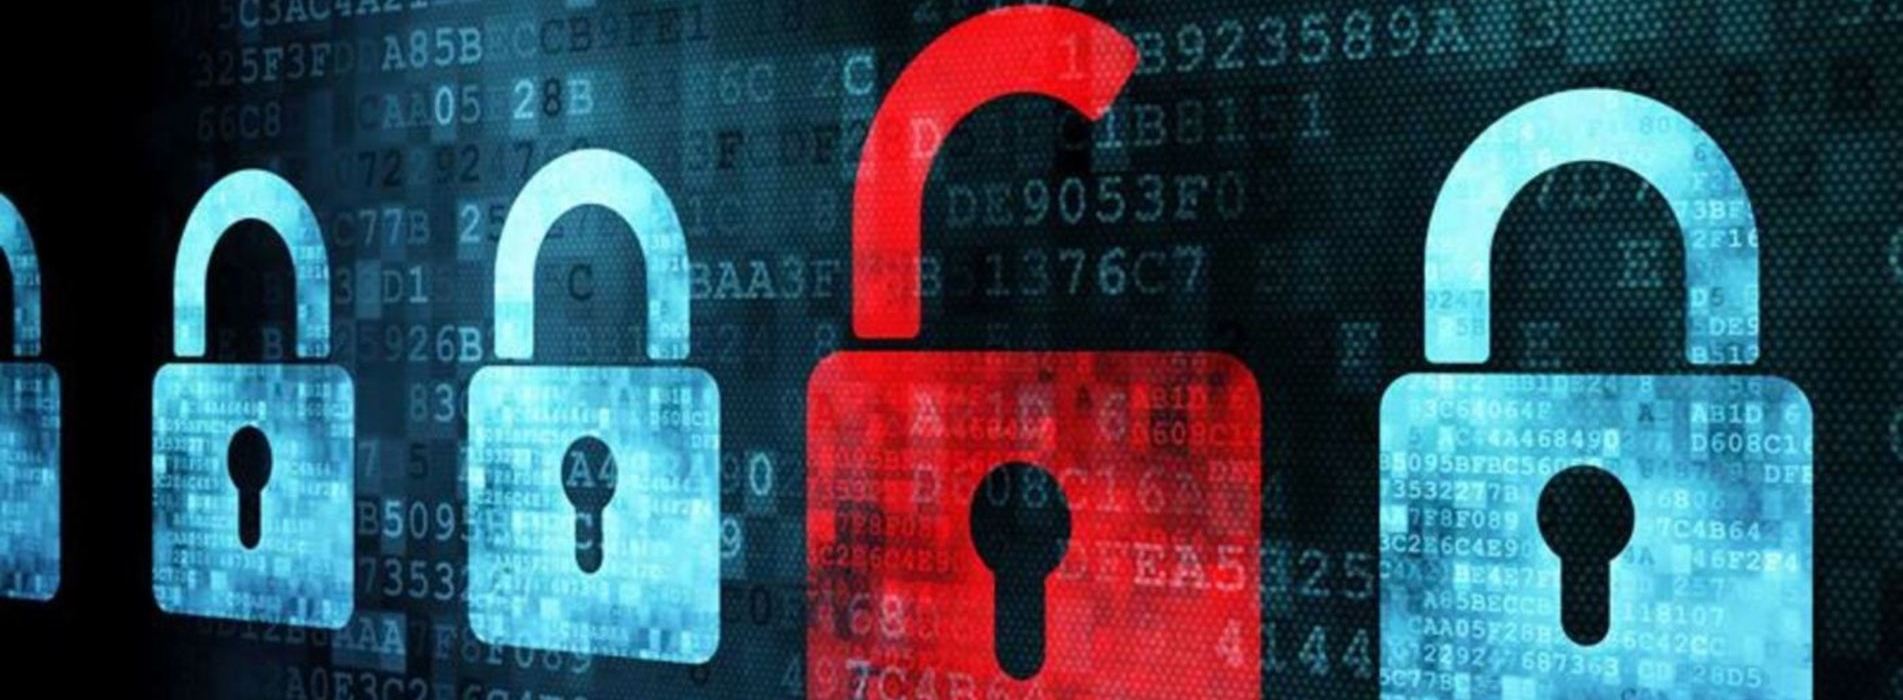 security locks image